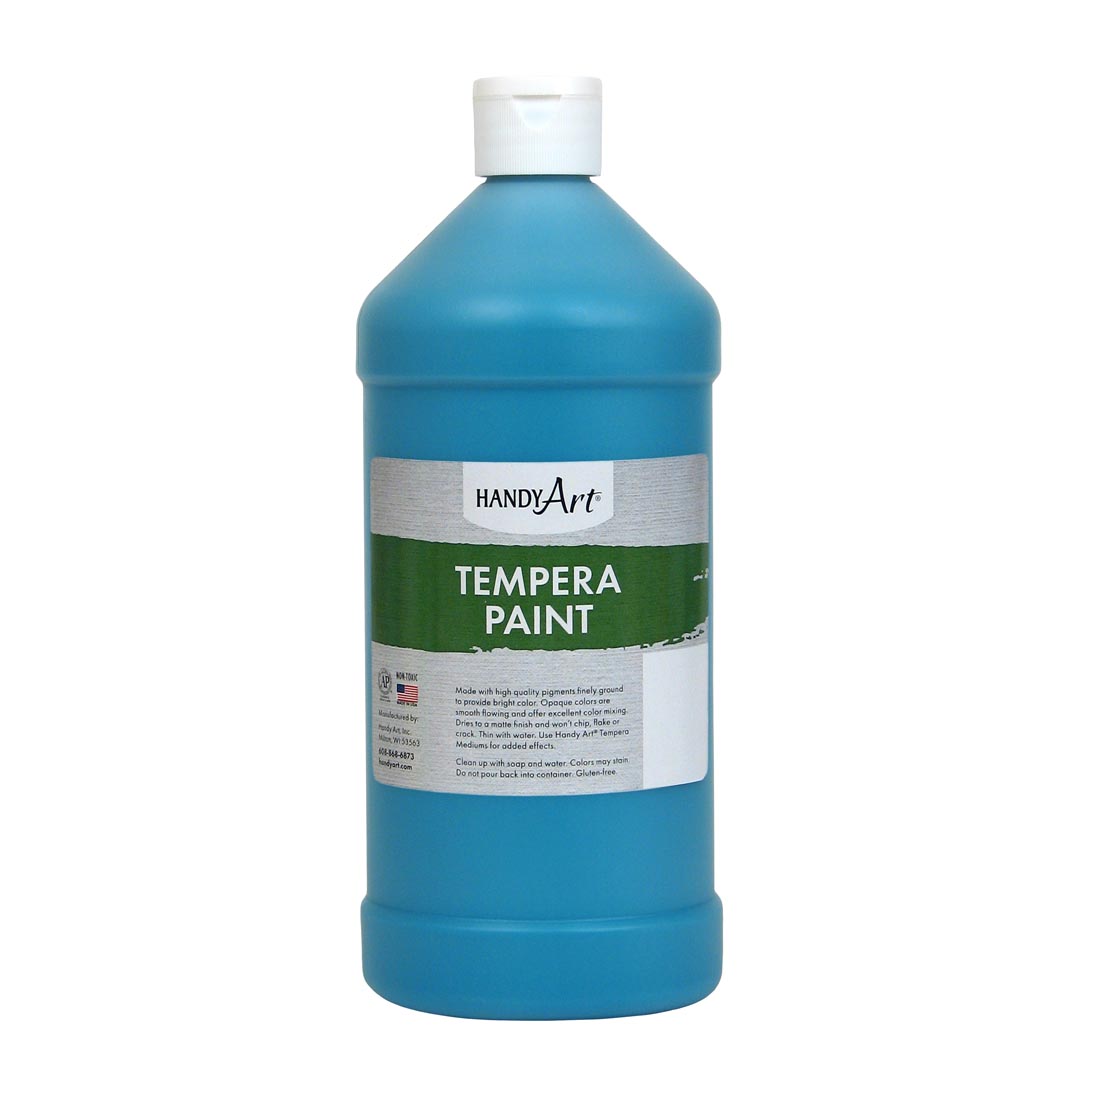 Quart bottle of Turquoise Handy Art Tempera Paint